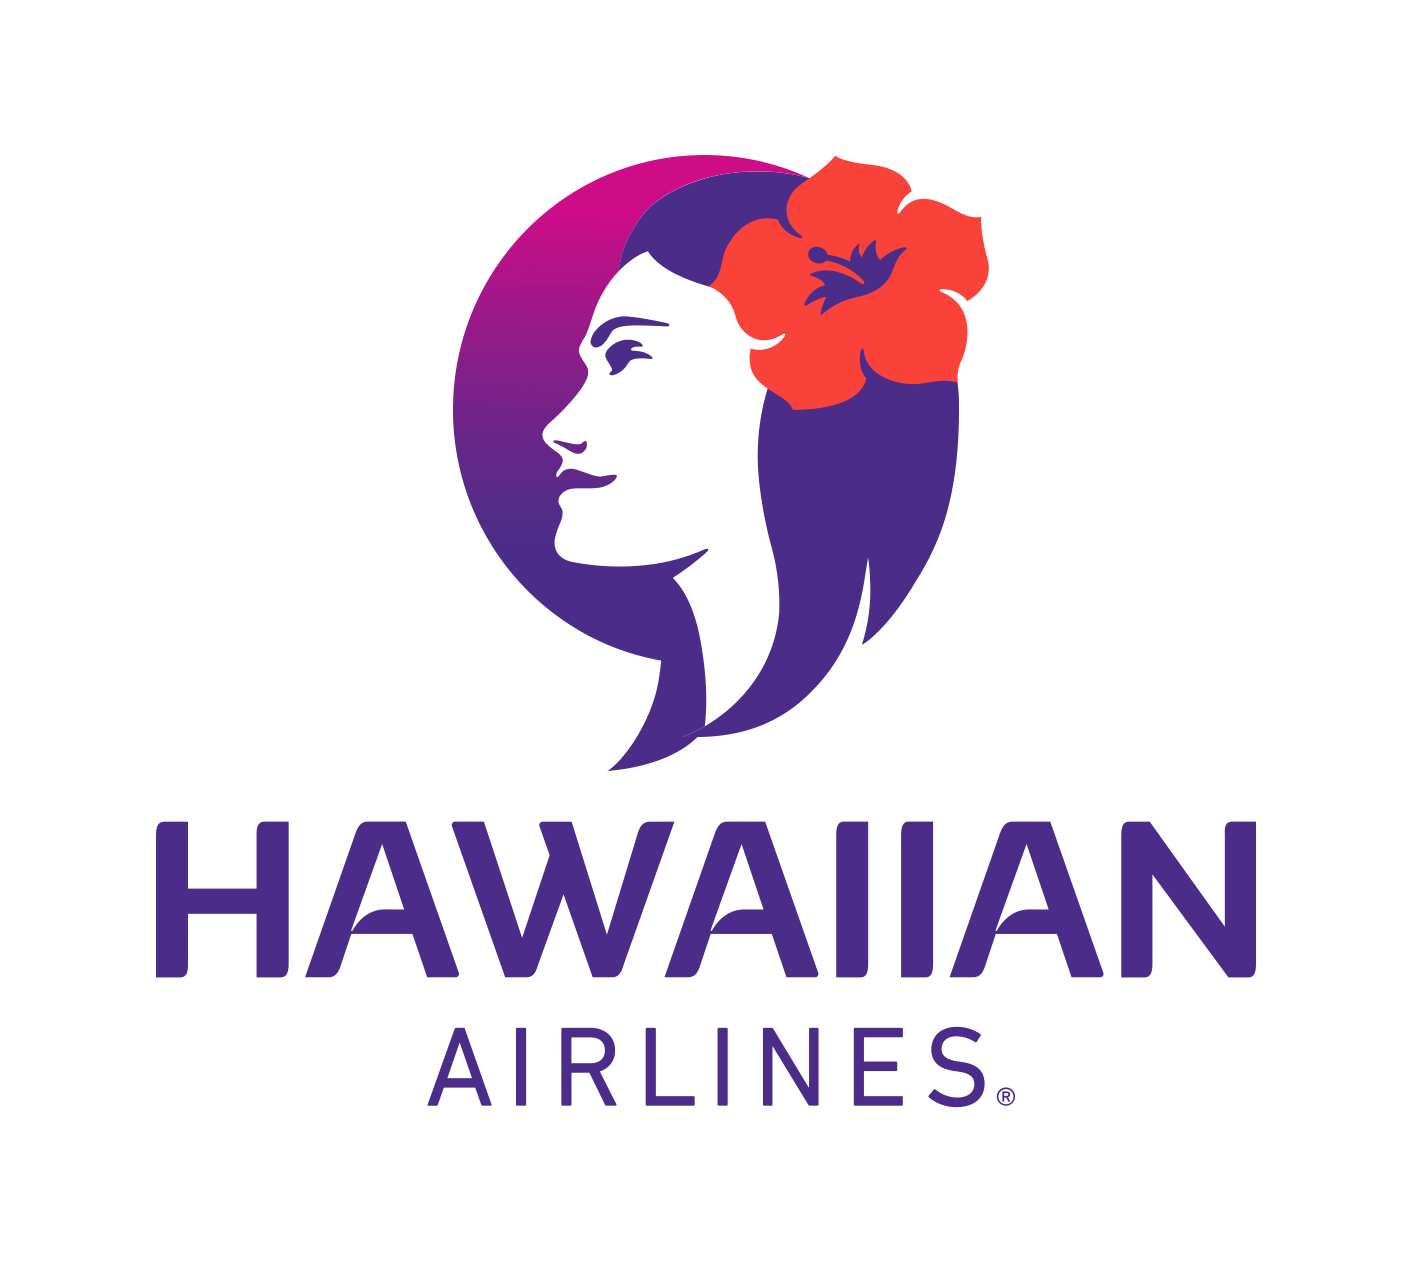 Hawaiian Airlines Coupons